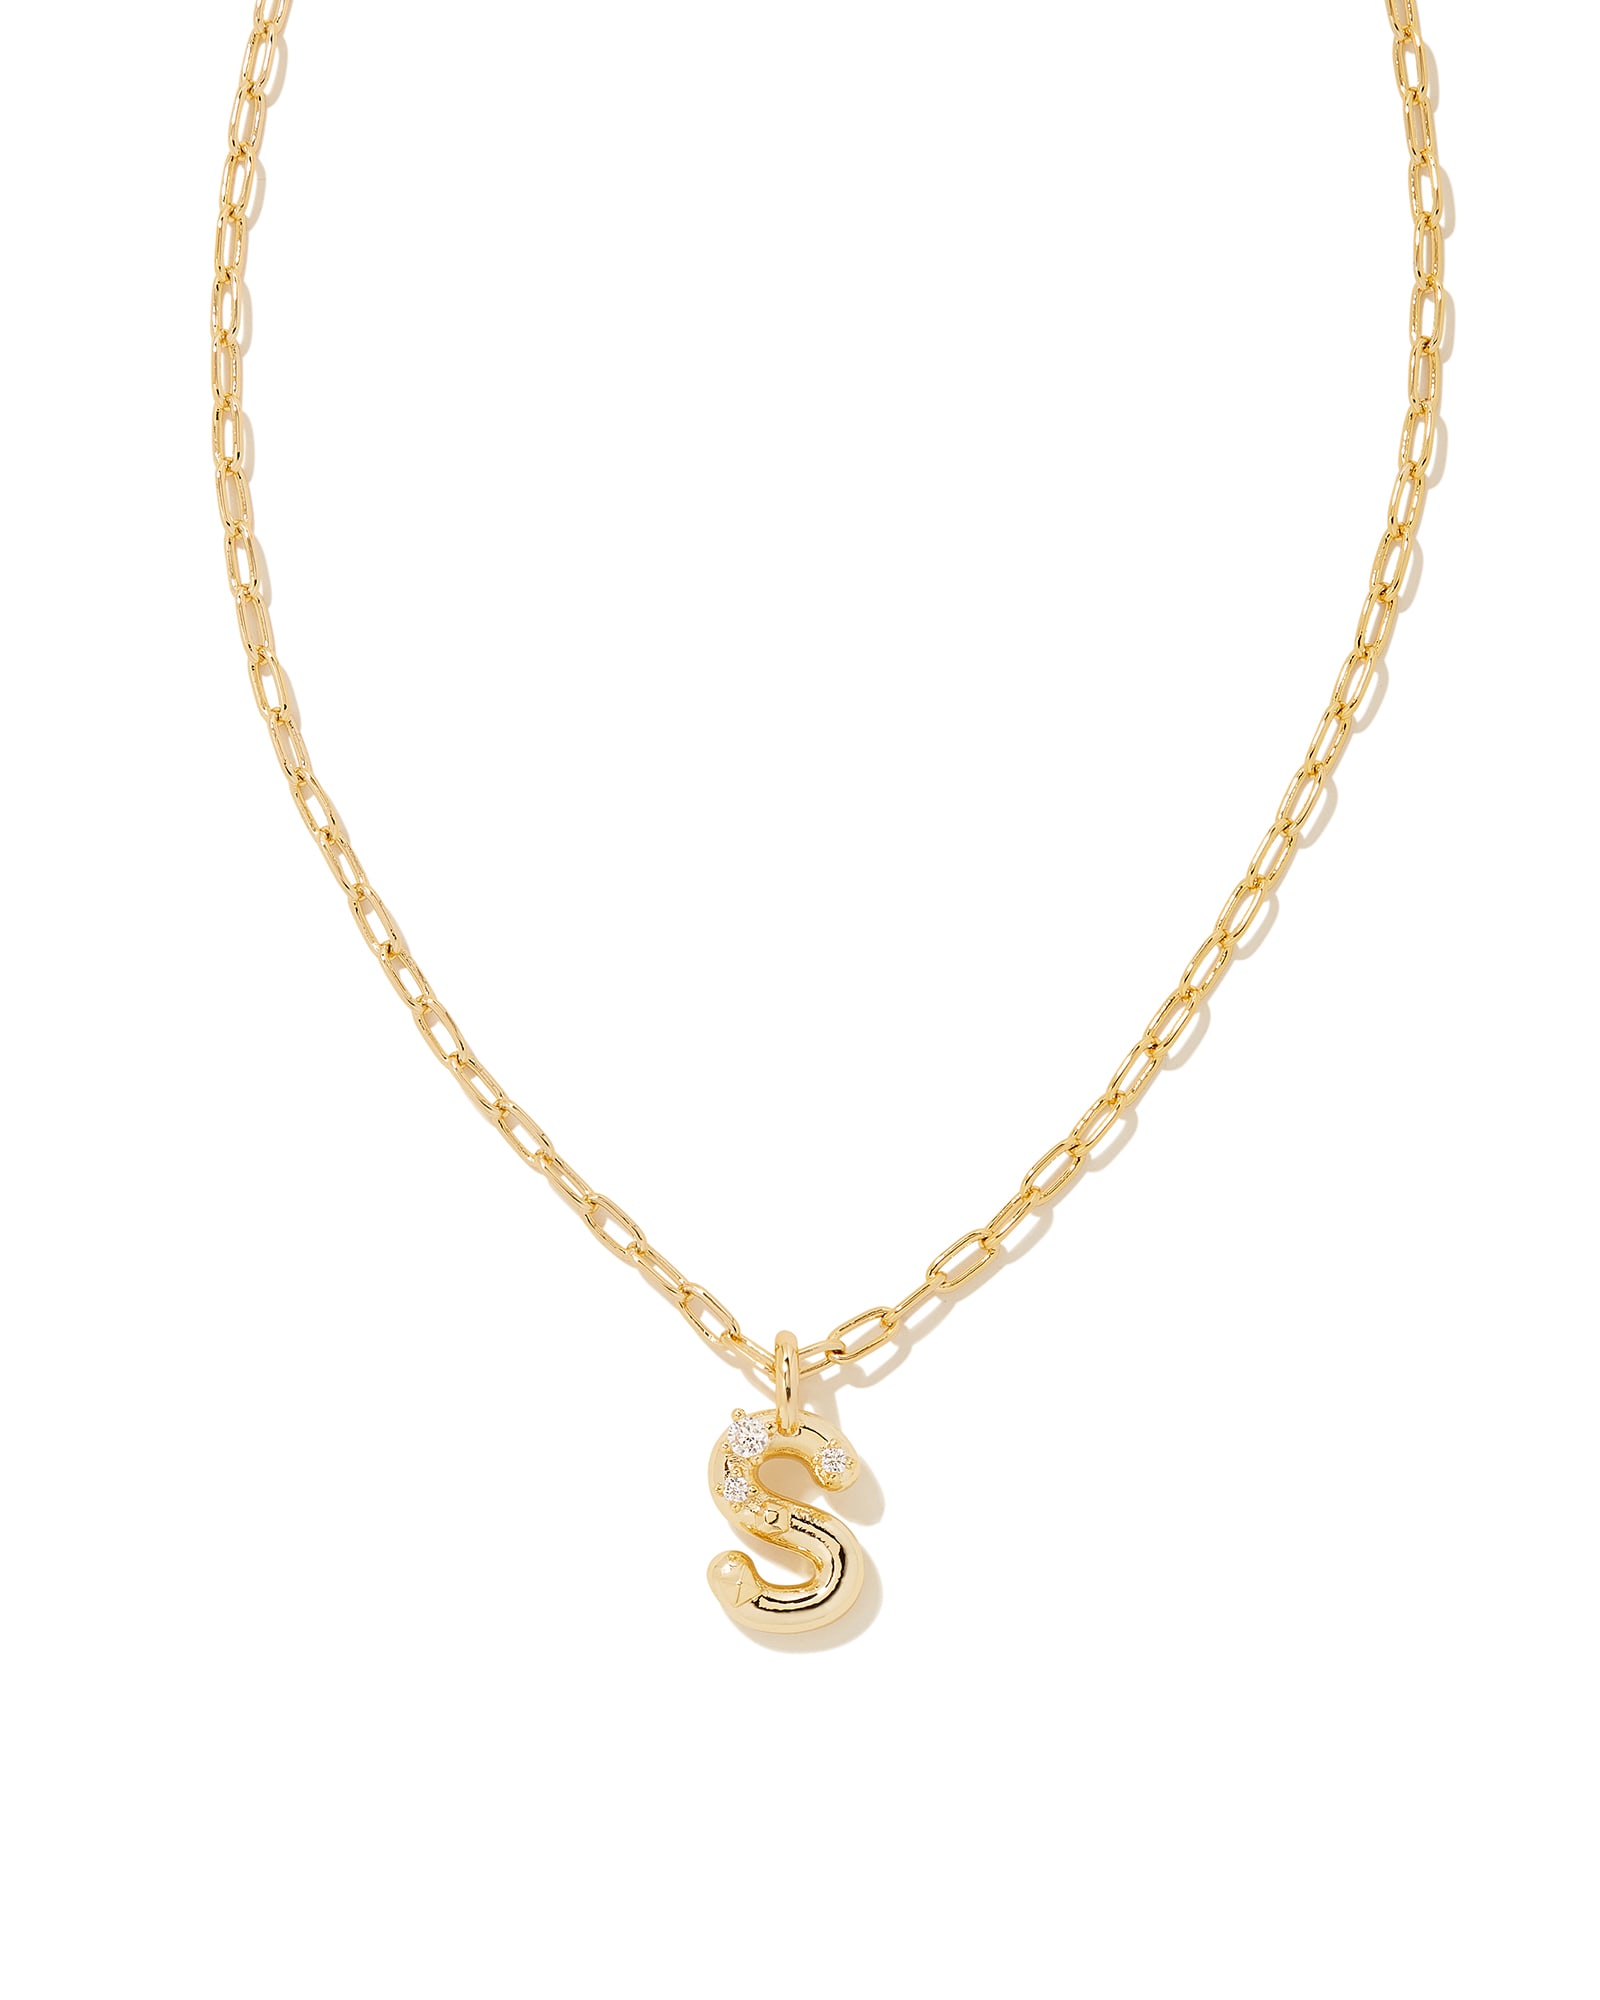 Elaina Gold Delicate Chain Bracelet in Iridescent Abalone | Kendra